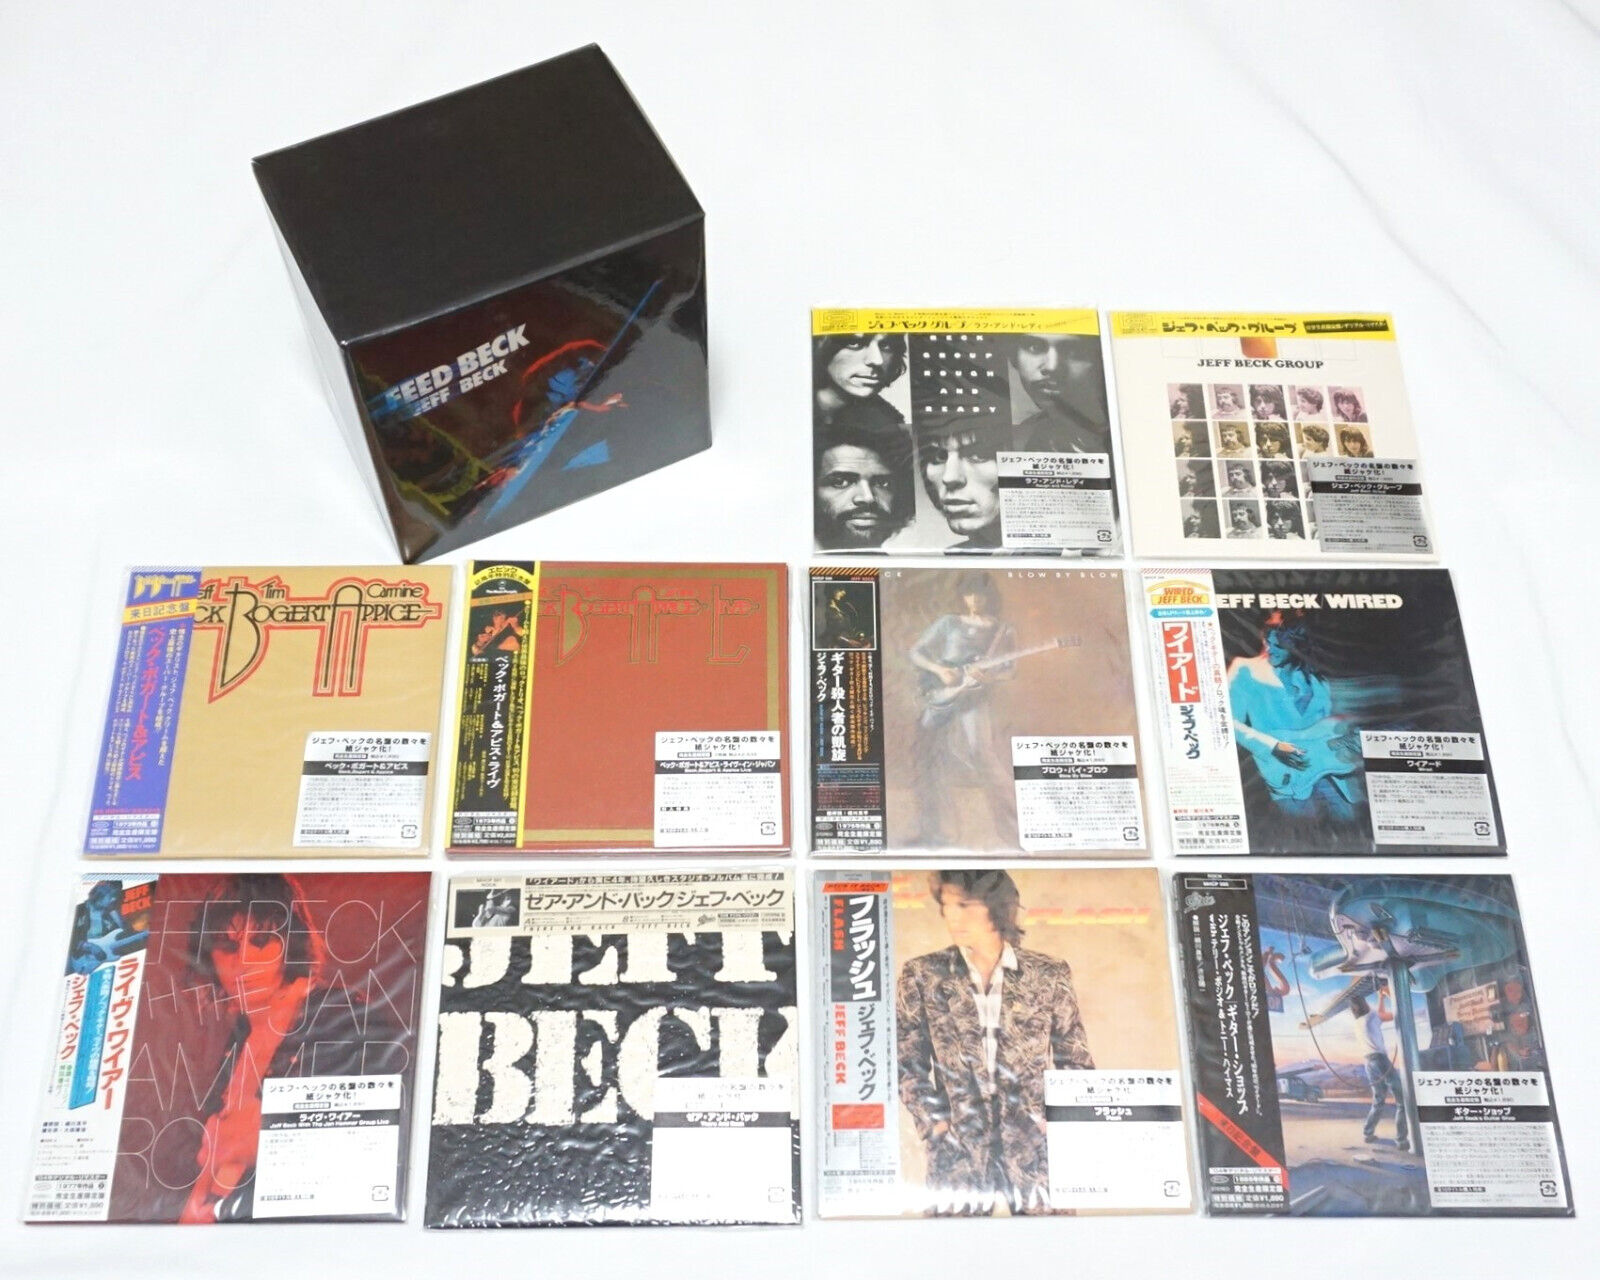 Jeff Beck - Mini LP CD 10 Titles Promo Box Set Replica Paper Sleeve Obi Japan